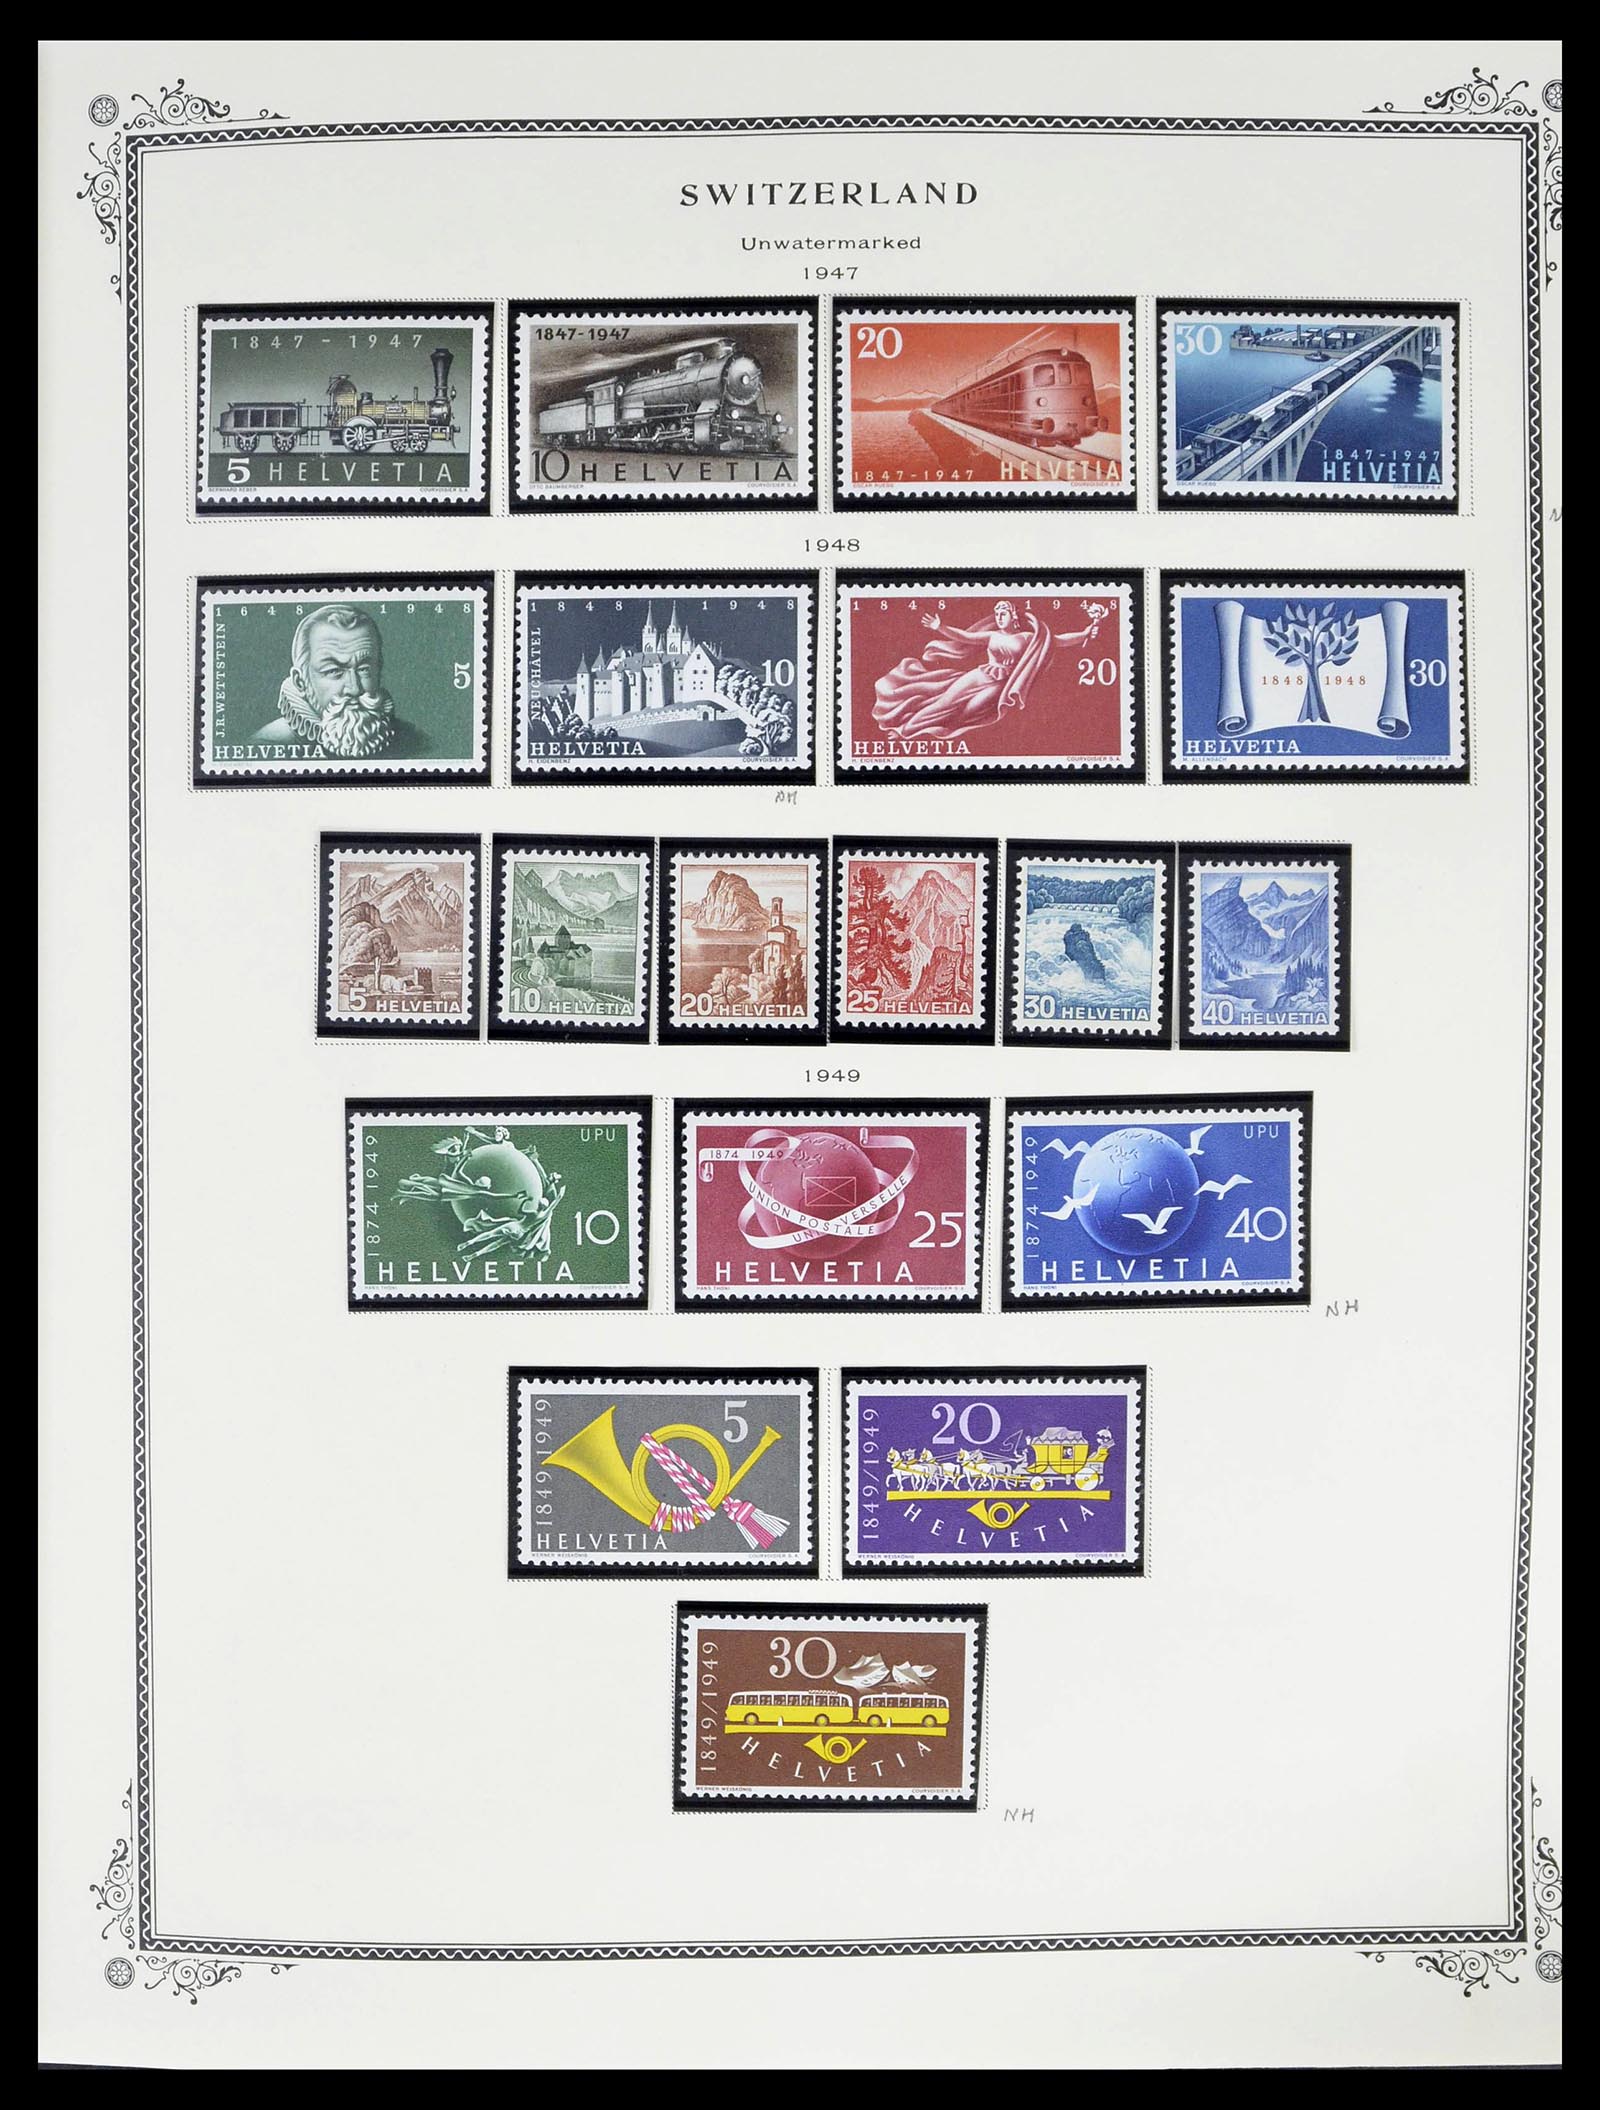 39178 0035 - Stamp collection 39178 Switzerland 1850-1989.